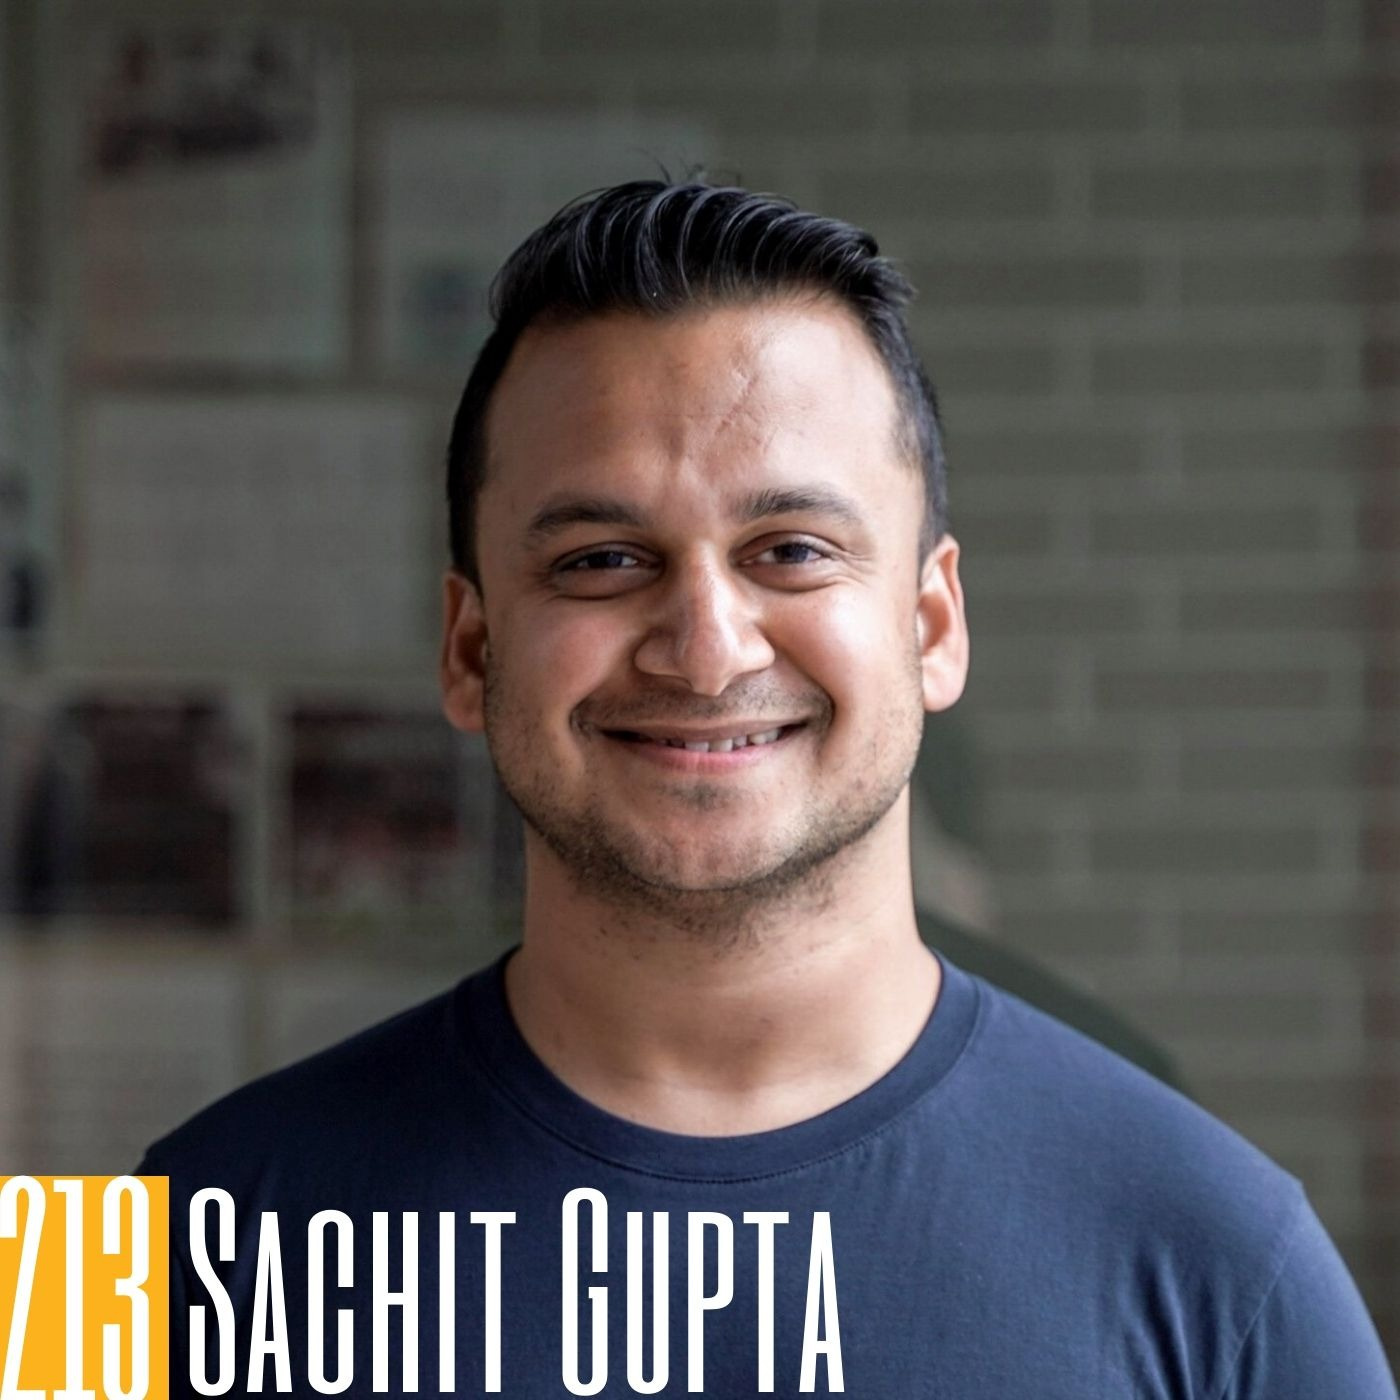 213 Sachit Gupta - A Conscious Creator